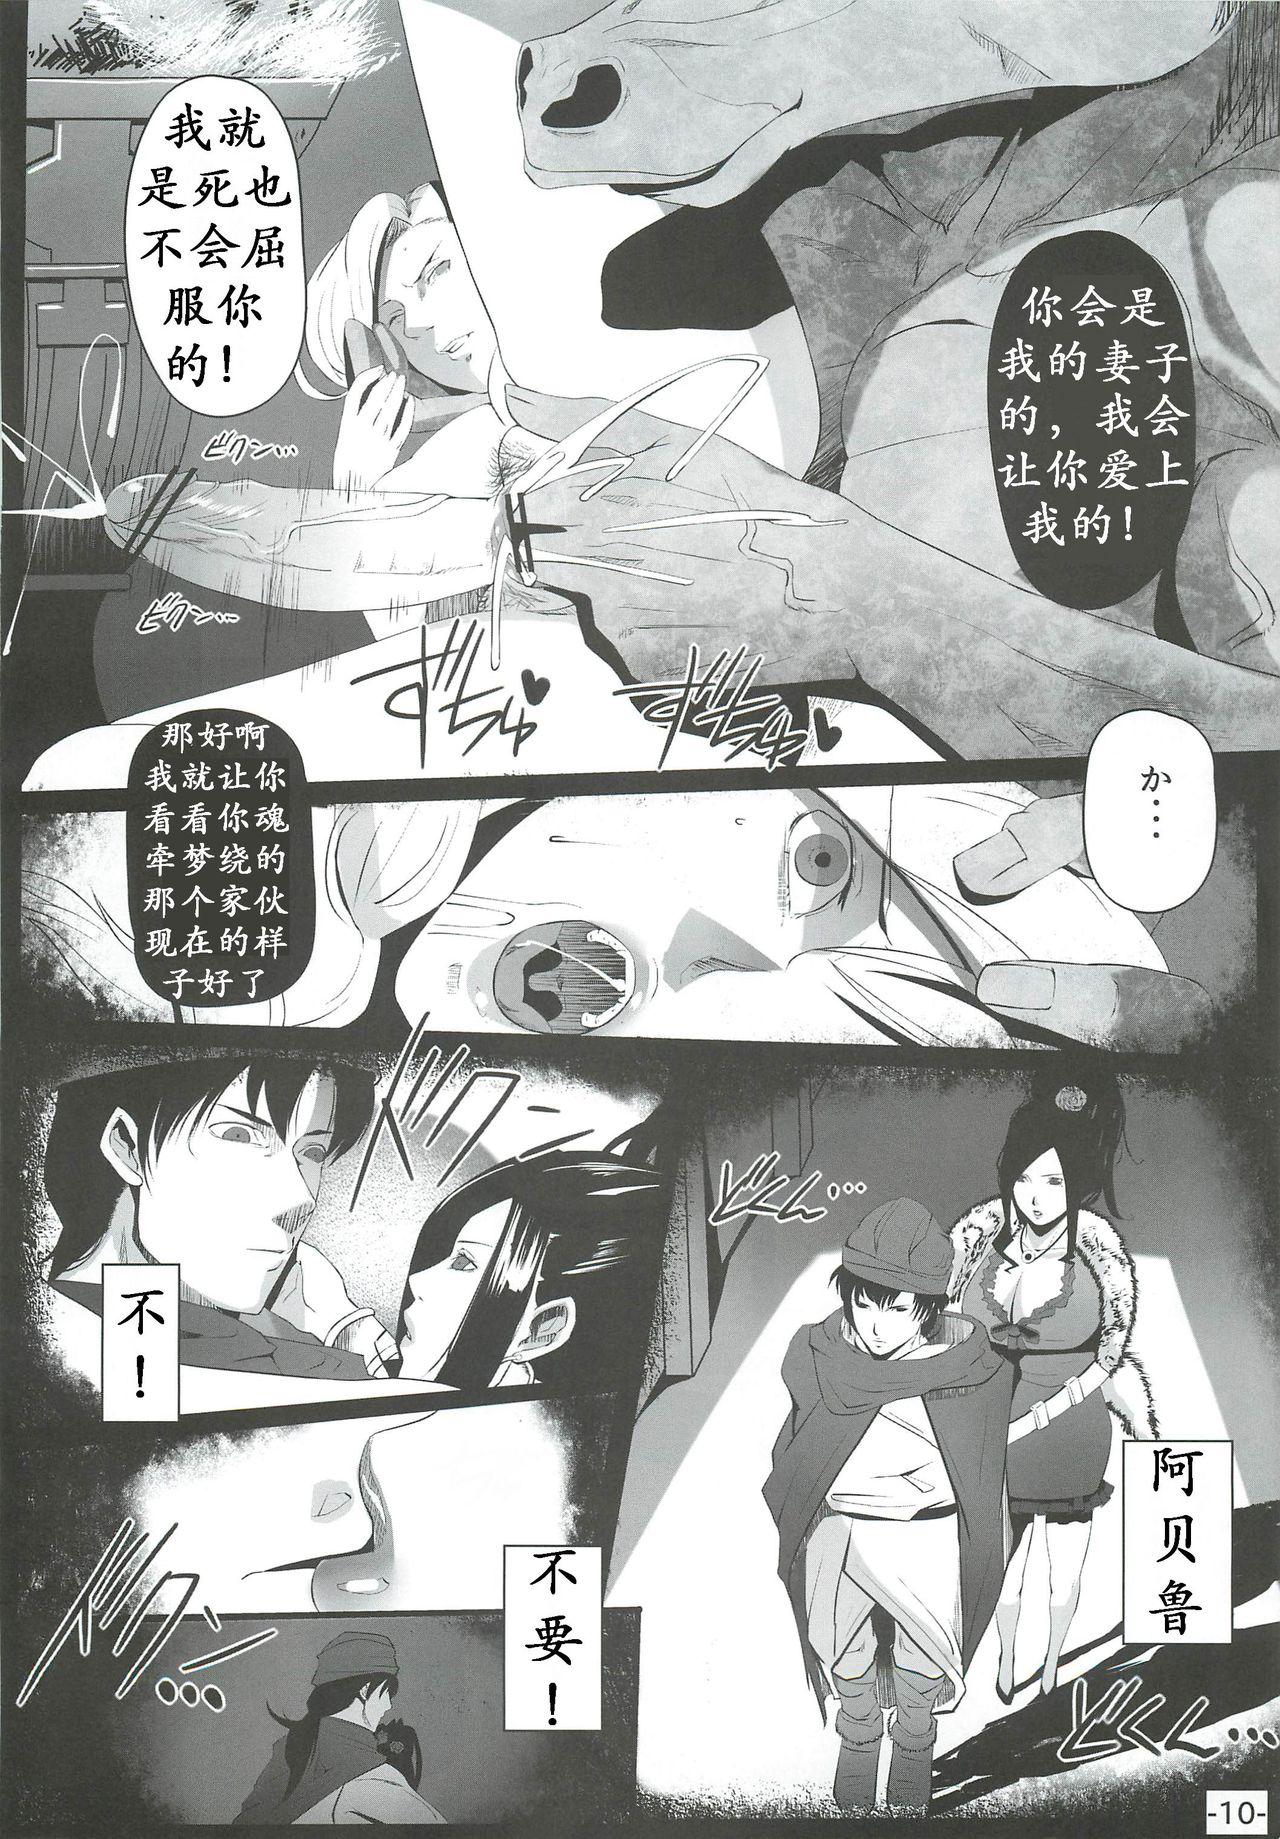 Korean allure | 诱惑 - Dragon quest v Gilf - Page 10